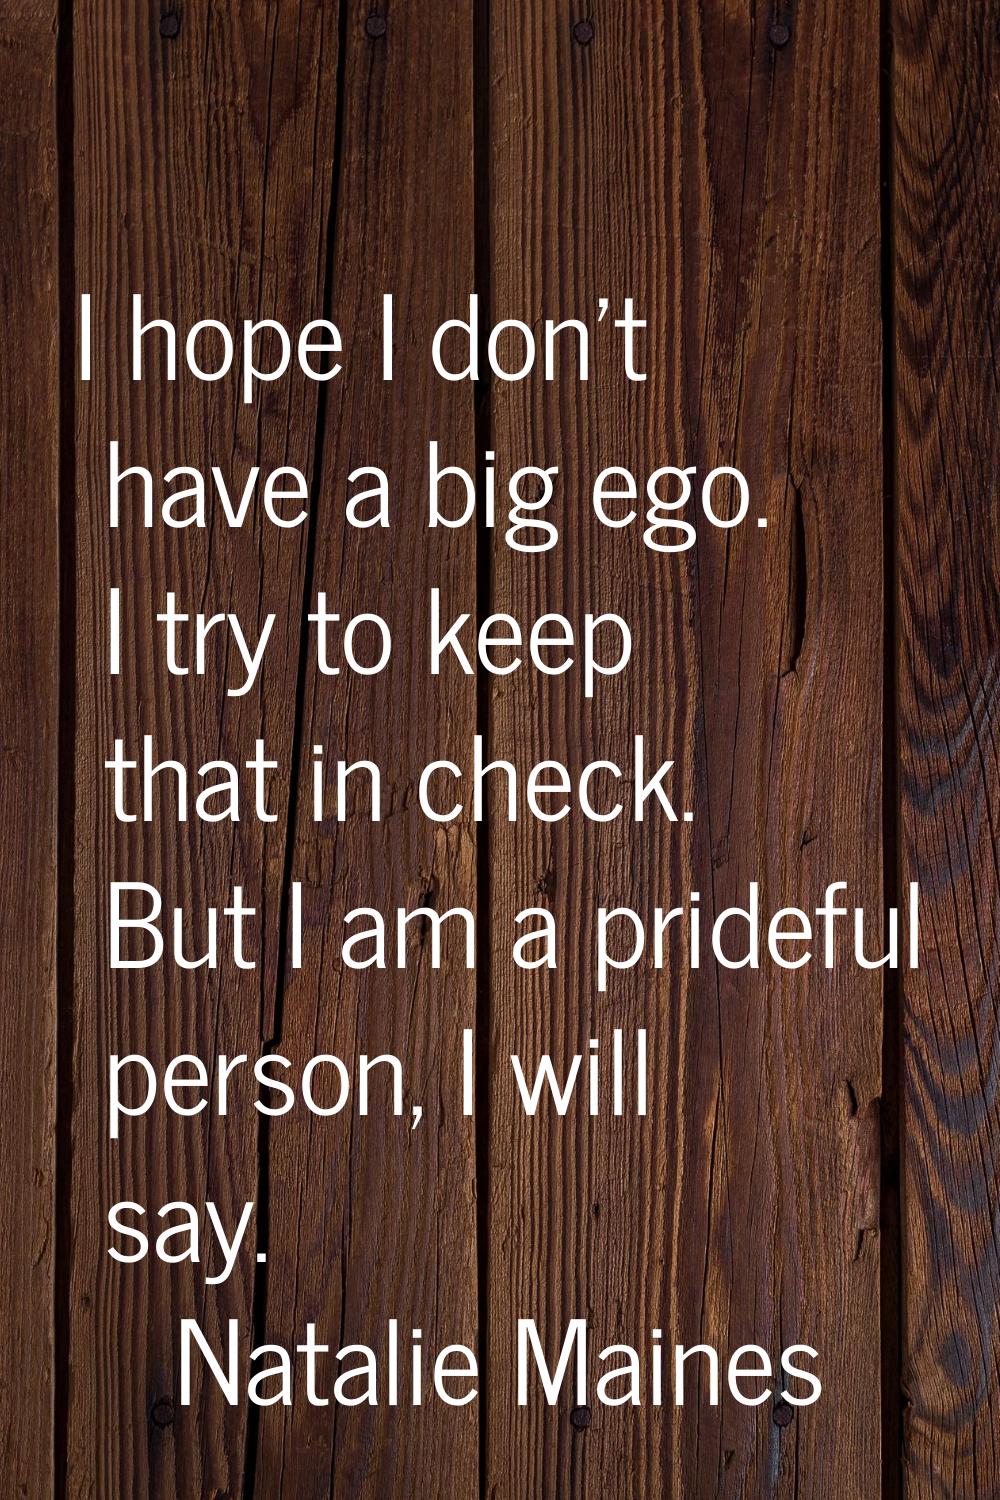 I hope I don't have a big ego. I try to keep that in check. But I am a prideful person, I will say.